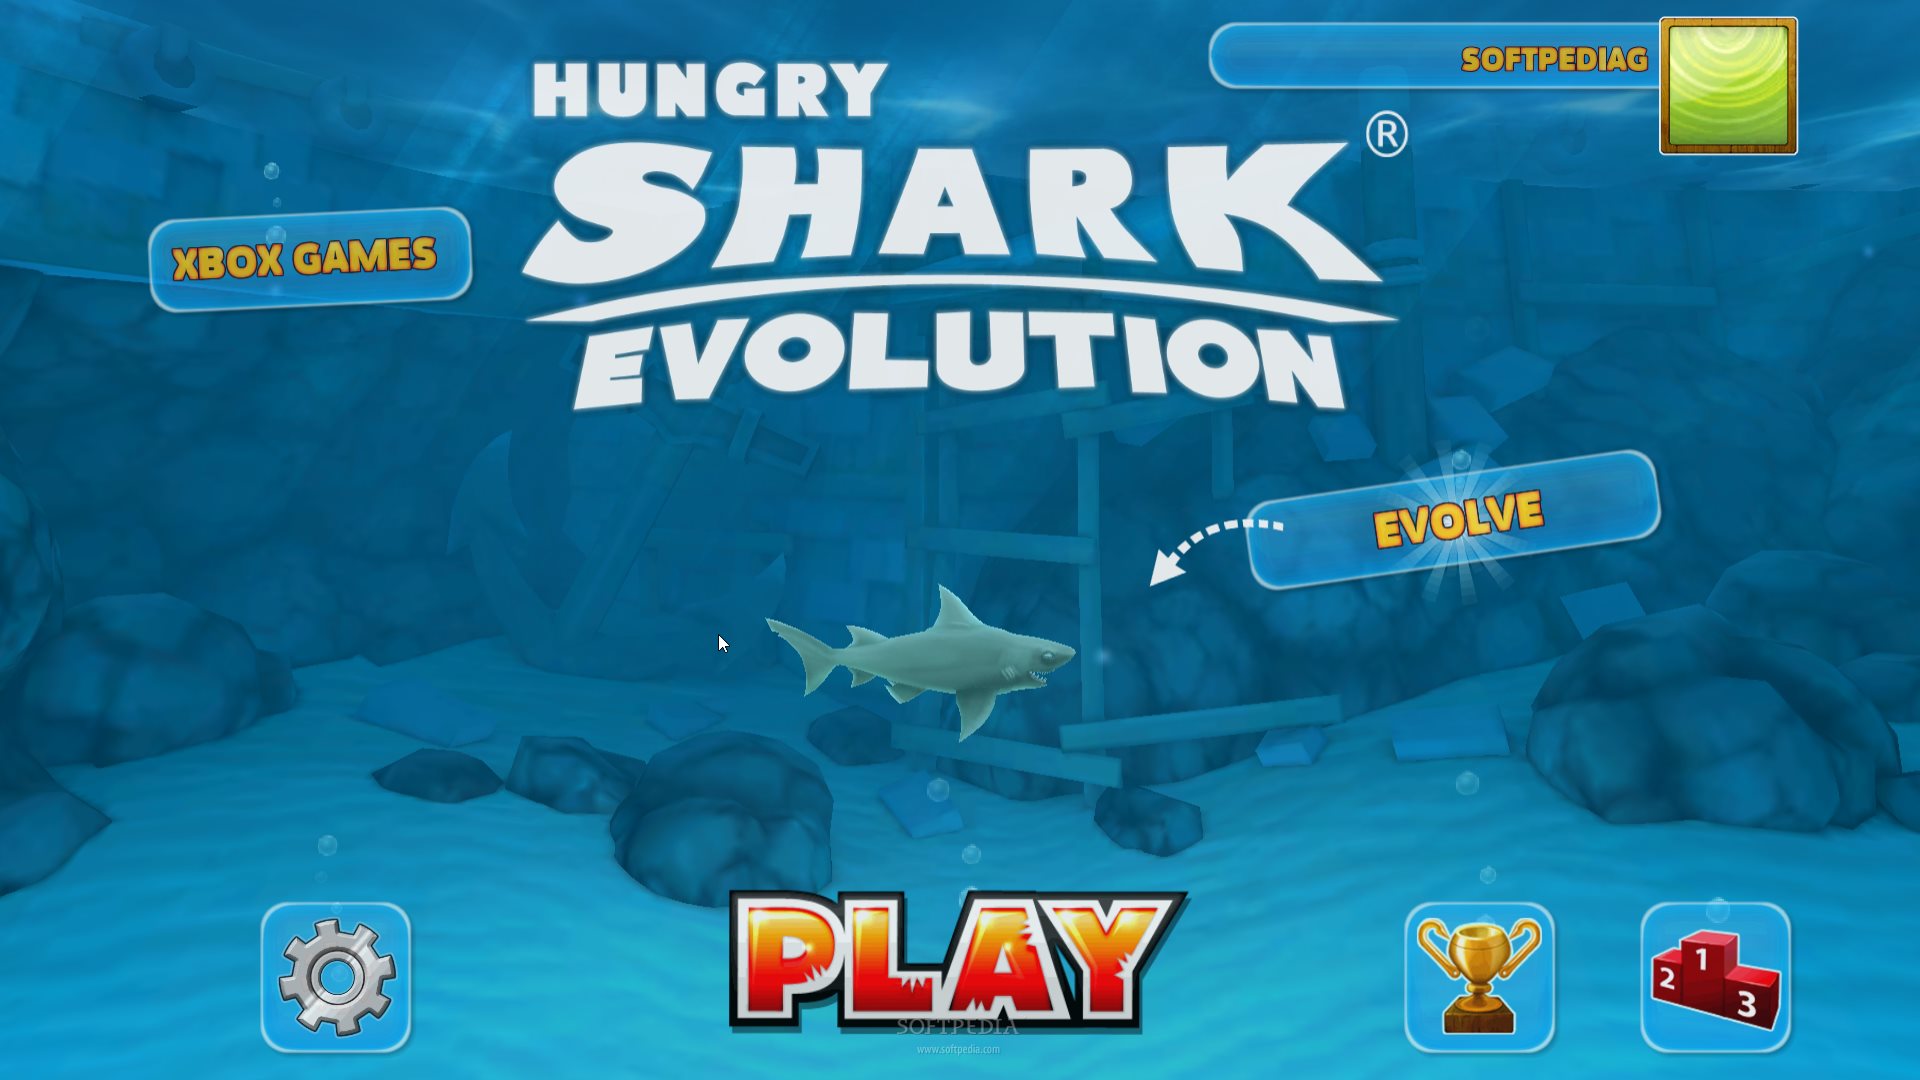 Hungry Shark Evolution - Hungry Shark Part 2 , HD Wallpaper & Backgrounds